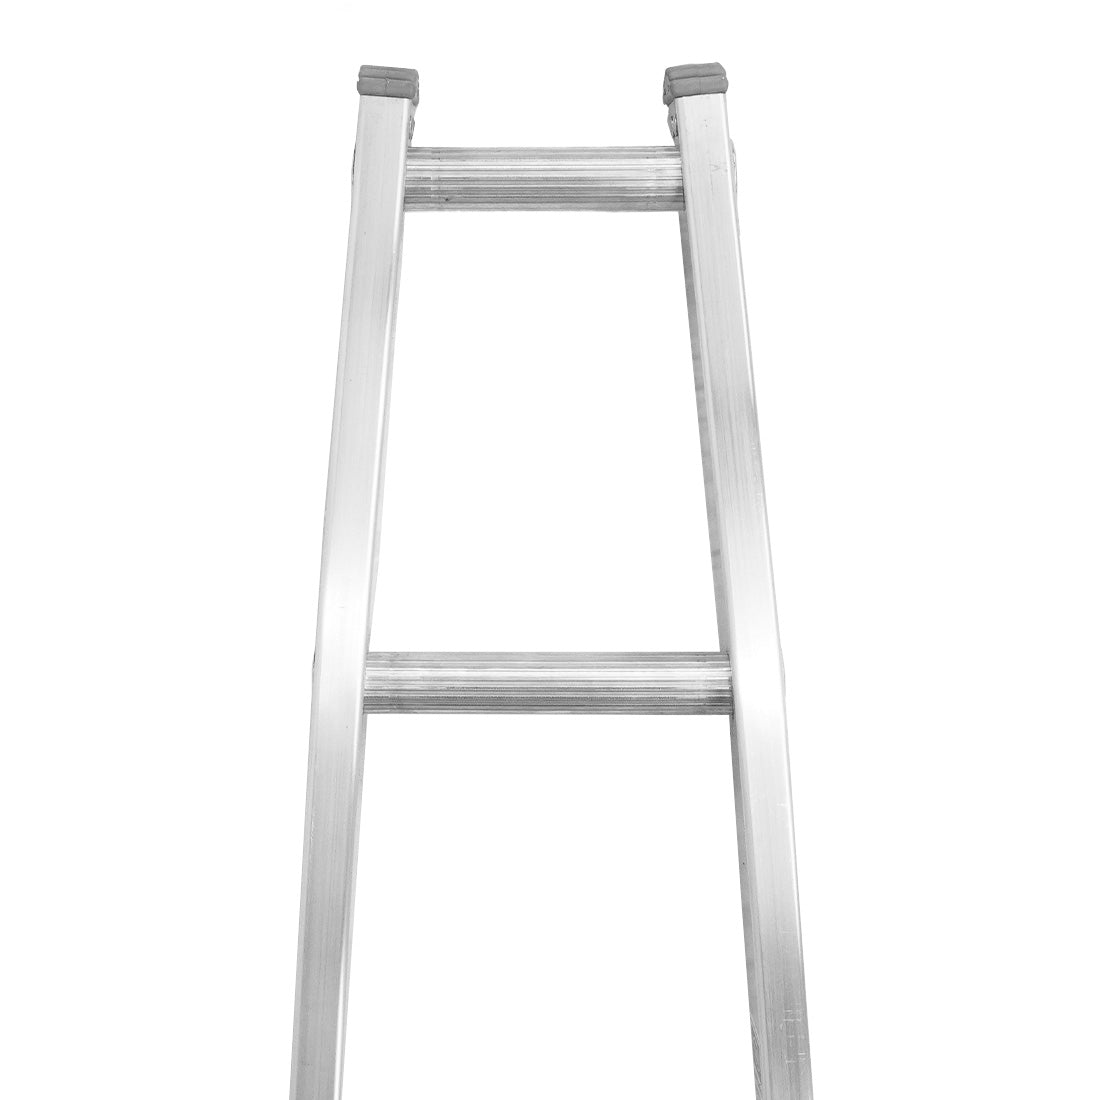 Metallic Ladder Aluminum Open Top Section - 8 Foot Top View